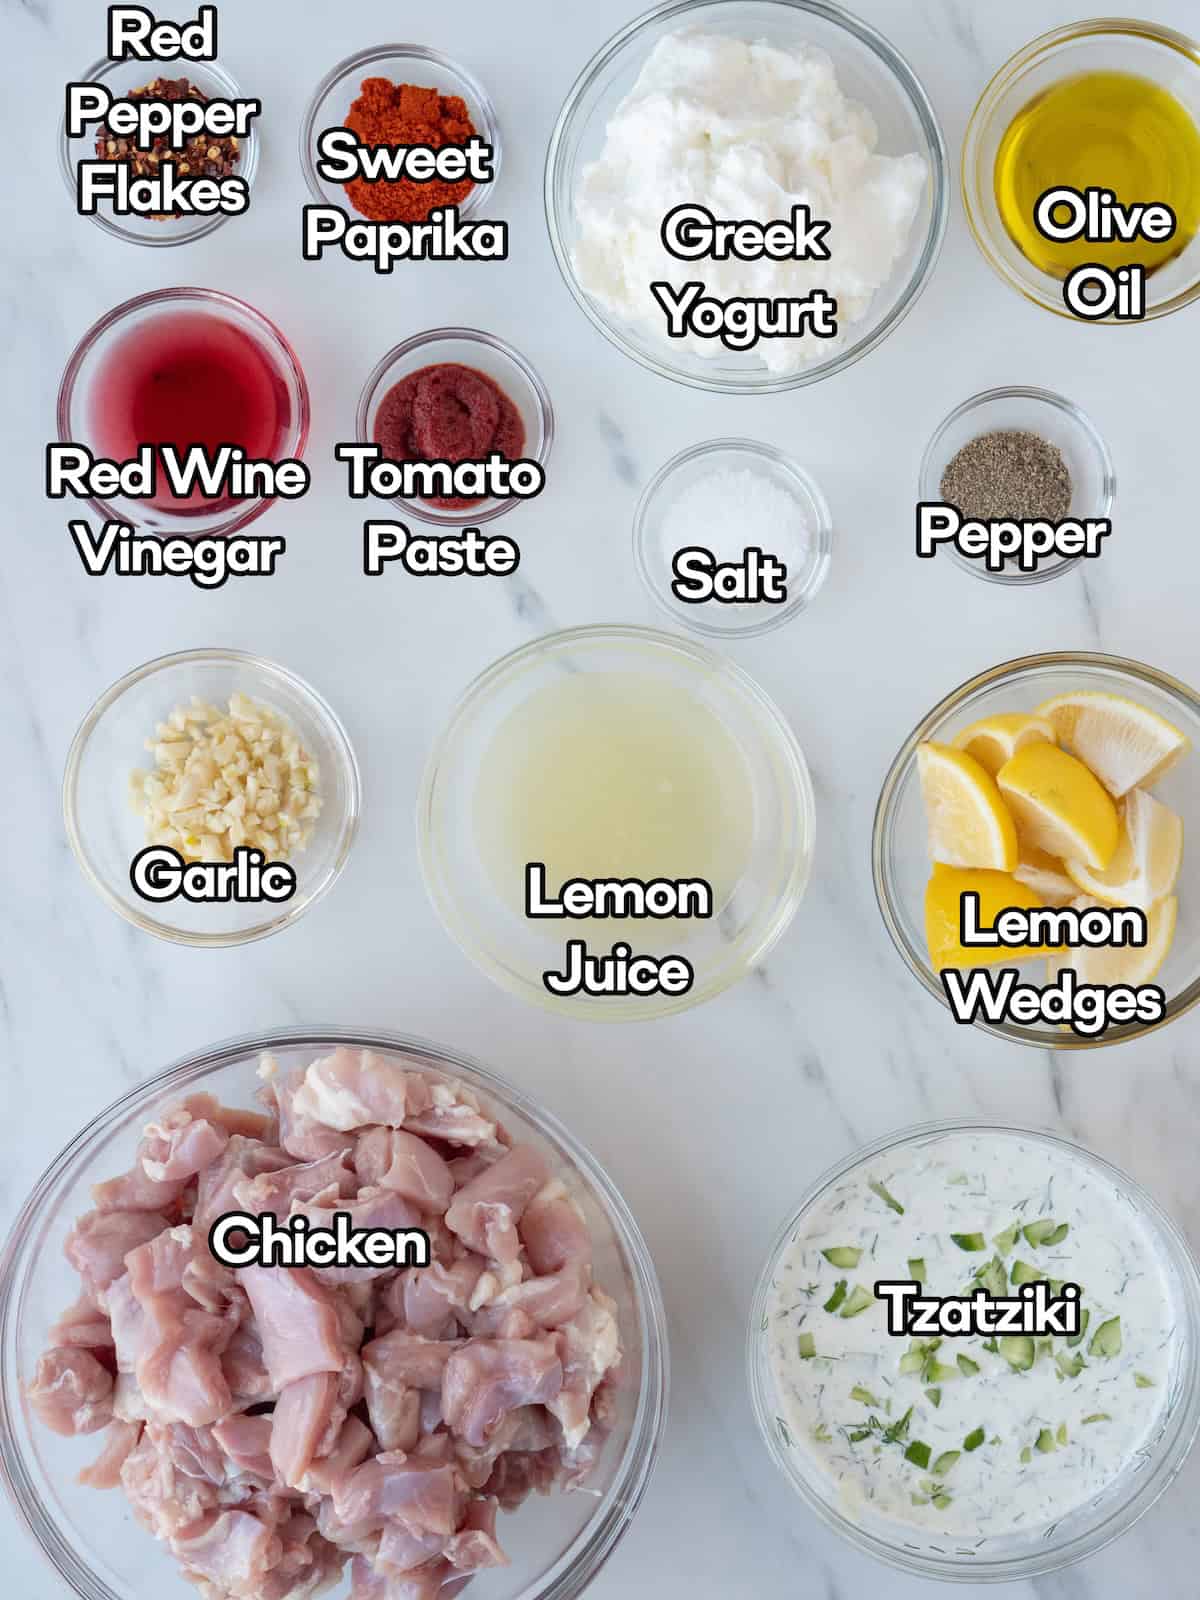 Mise en place of all ingredients to make yogurt marinated grilled chicken skewers.